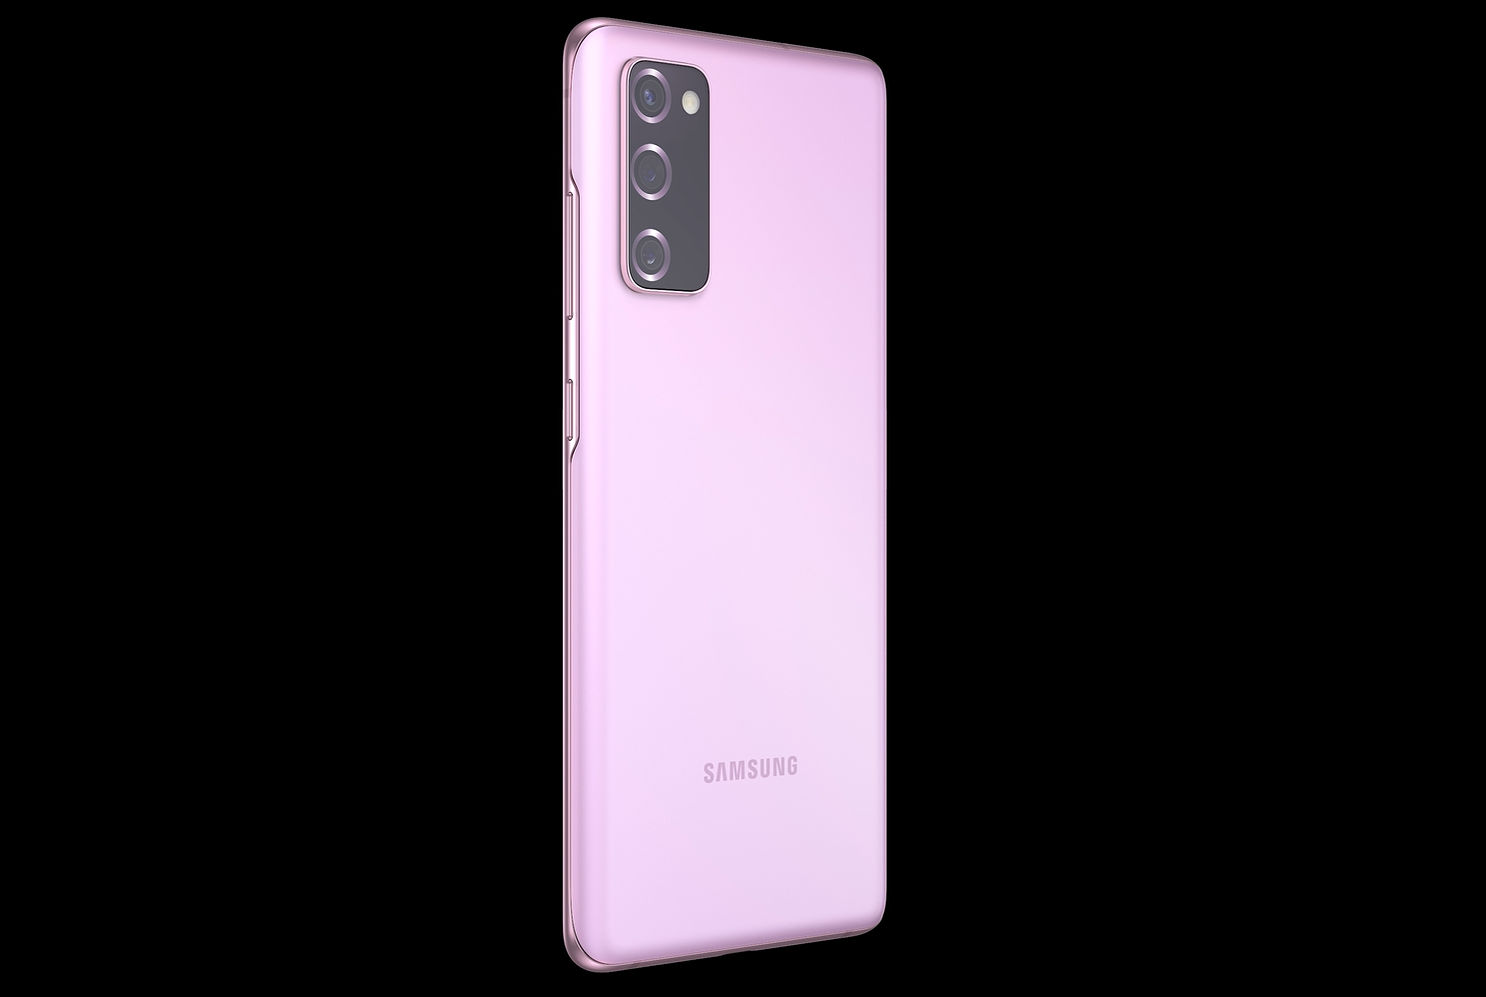 Samsung Galaxy S20 FE 5G UW: Price & Features